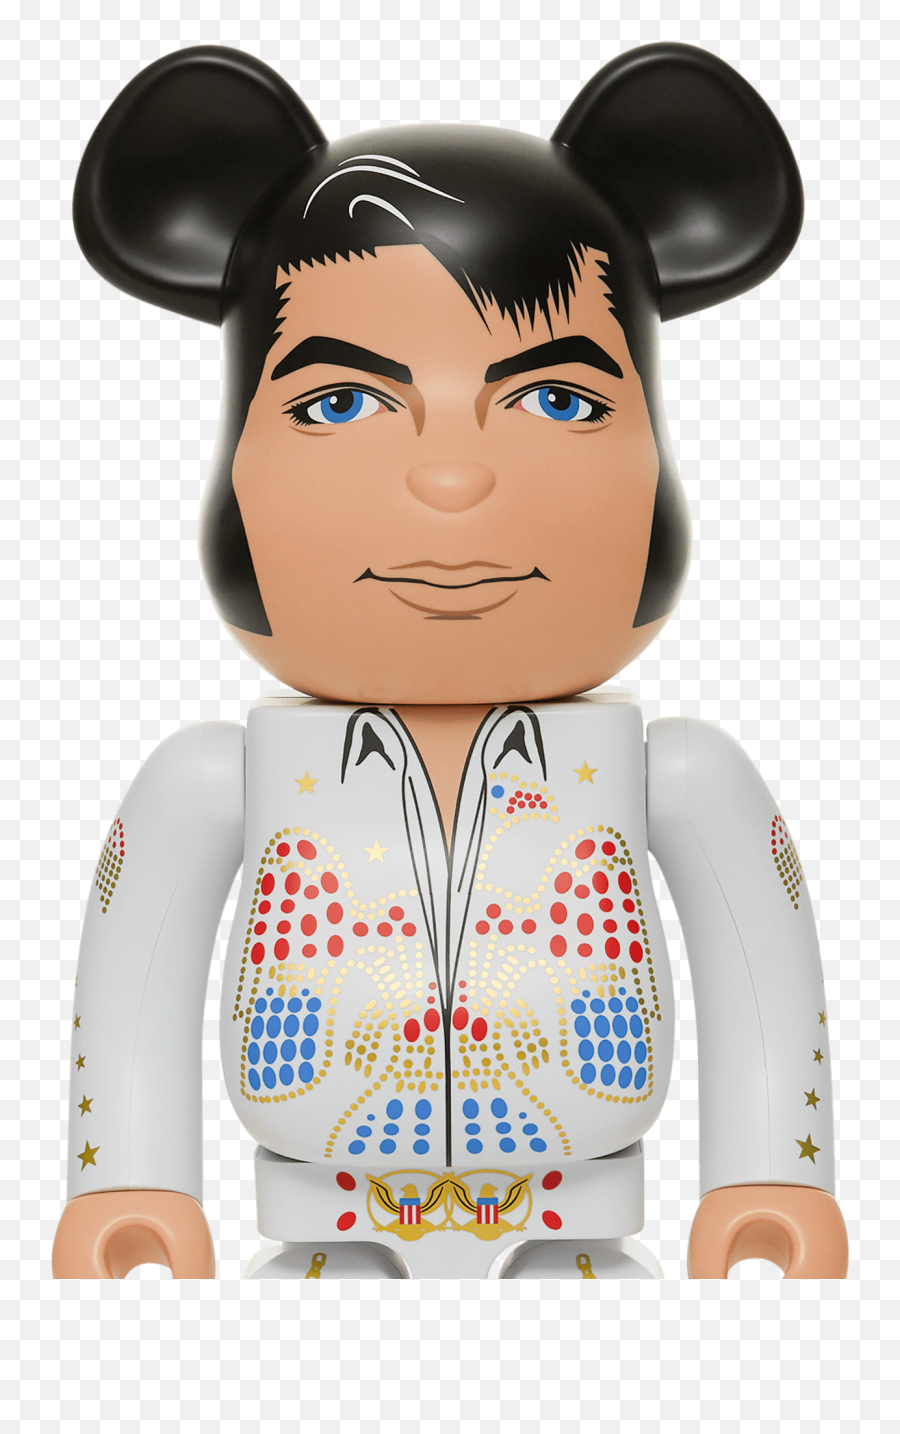 Medicom Elvis Presley - Medicom Toy Elvis Presley Emoji,Elvis Presley Clipart